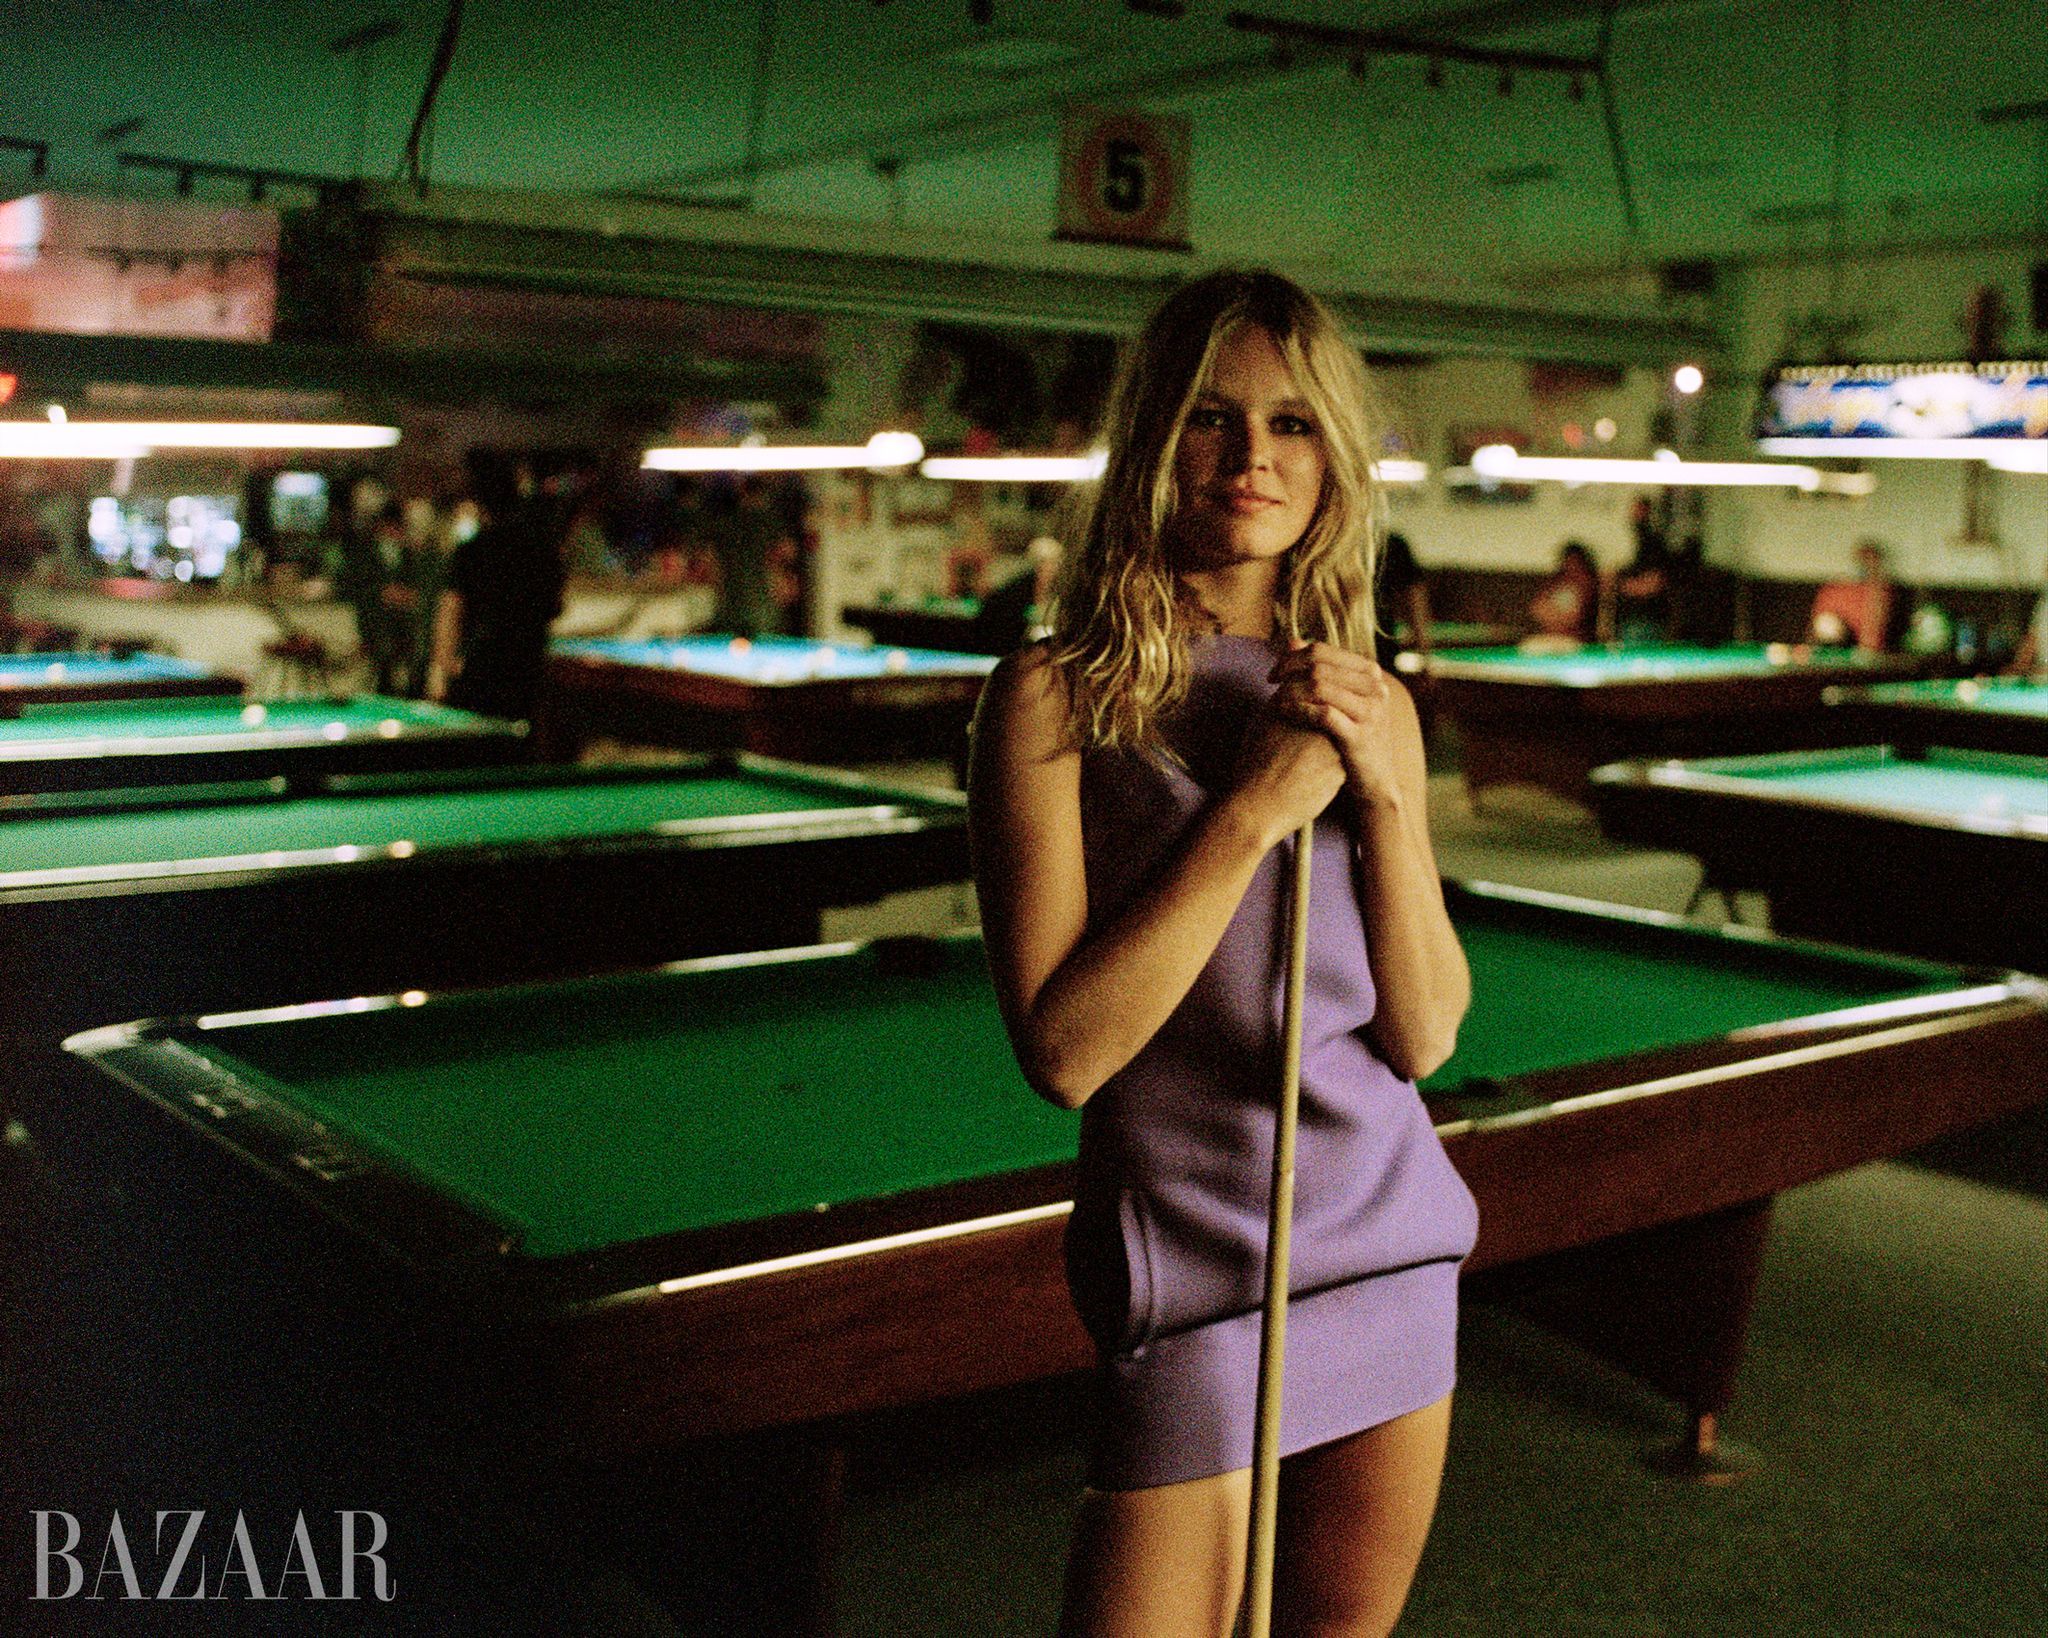 blonde model in lavender dress by pool tables